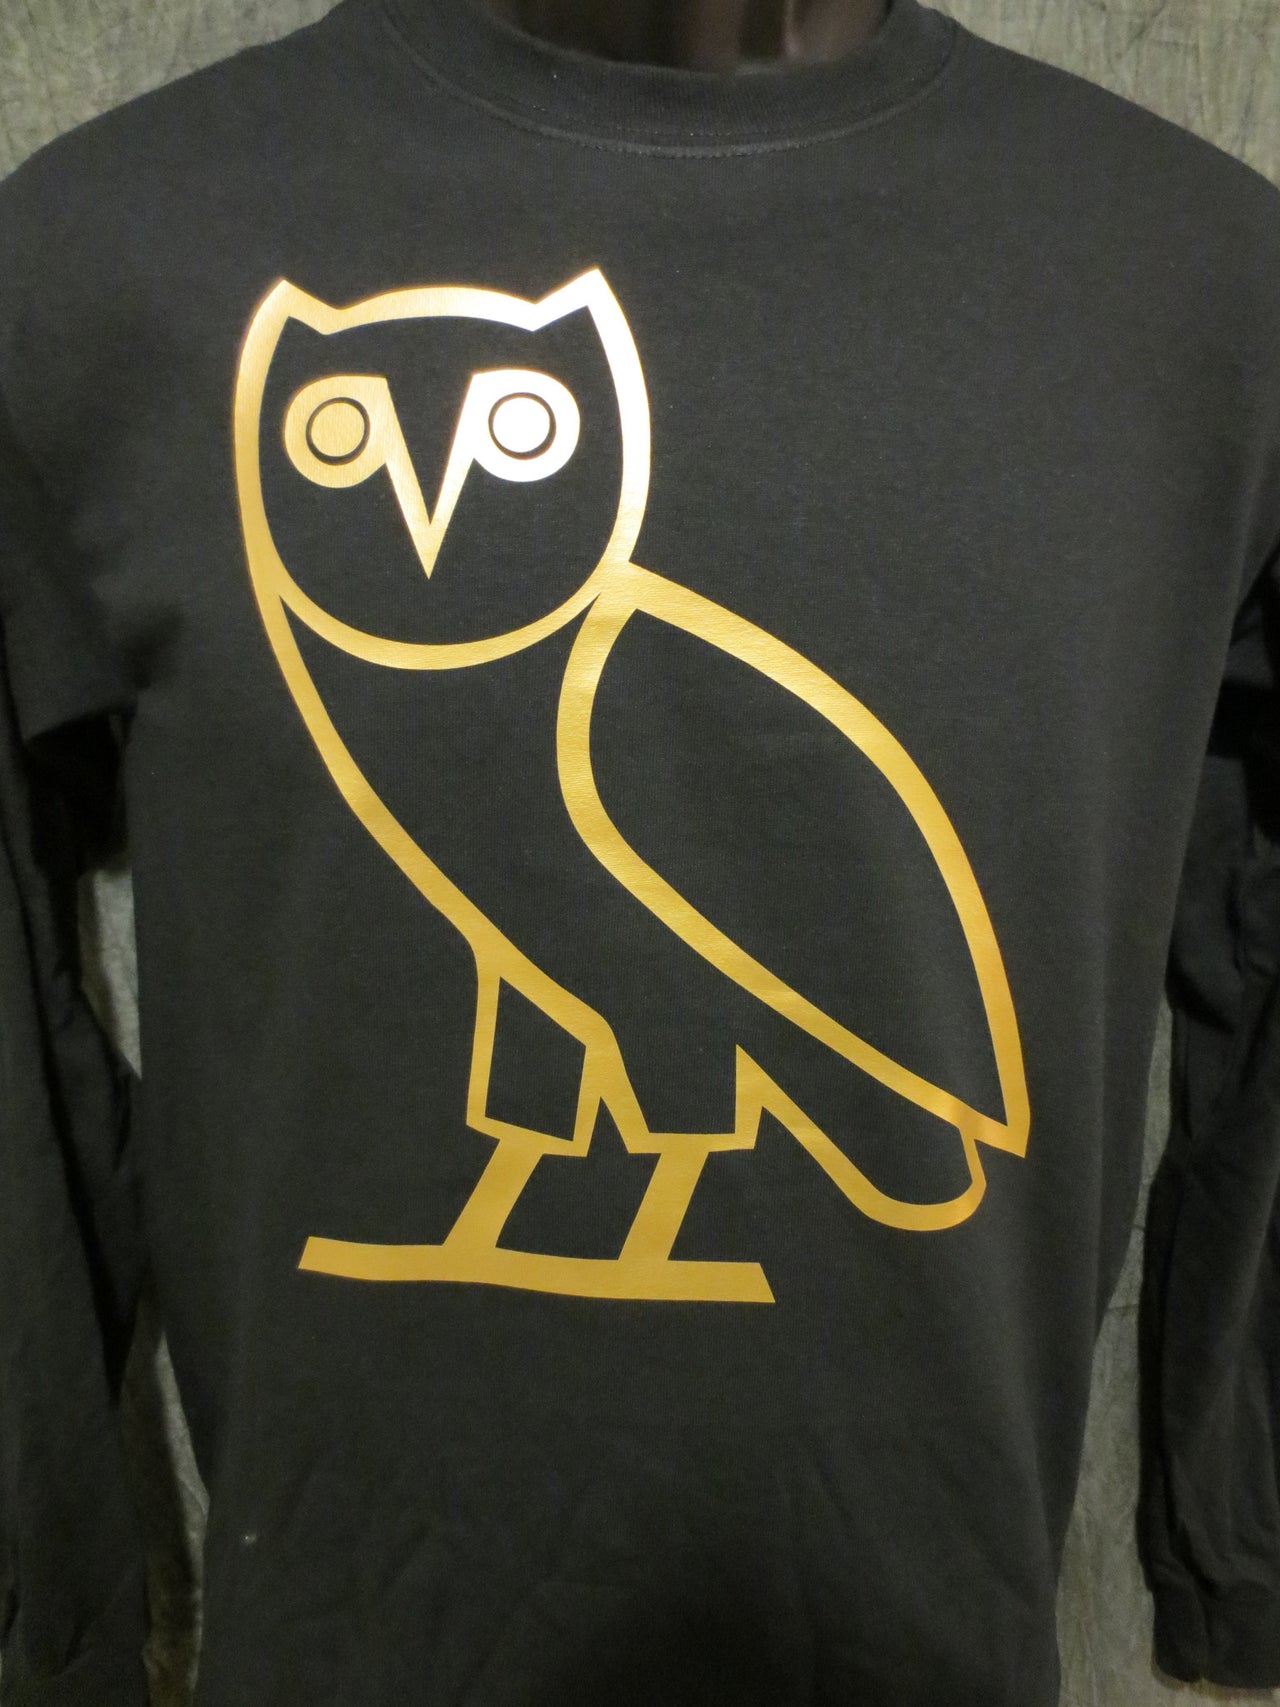 Ovo Drake October's Very Own Ovoxo Owl Gang Longsleeve Black Tshirt - TshirtNow.net - 4